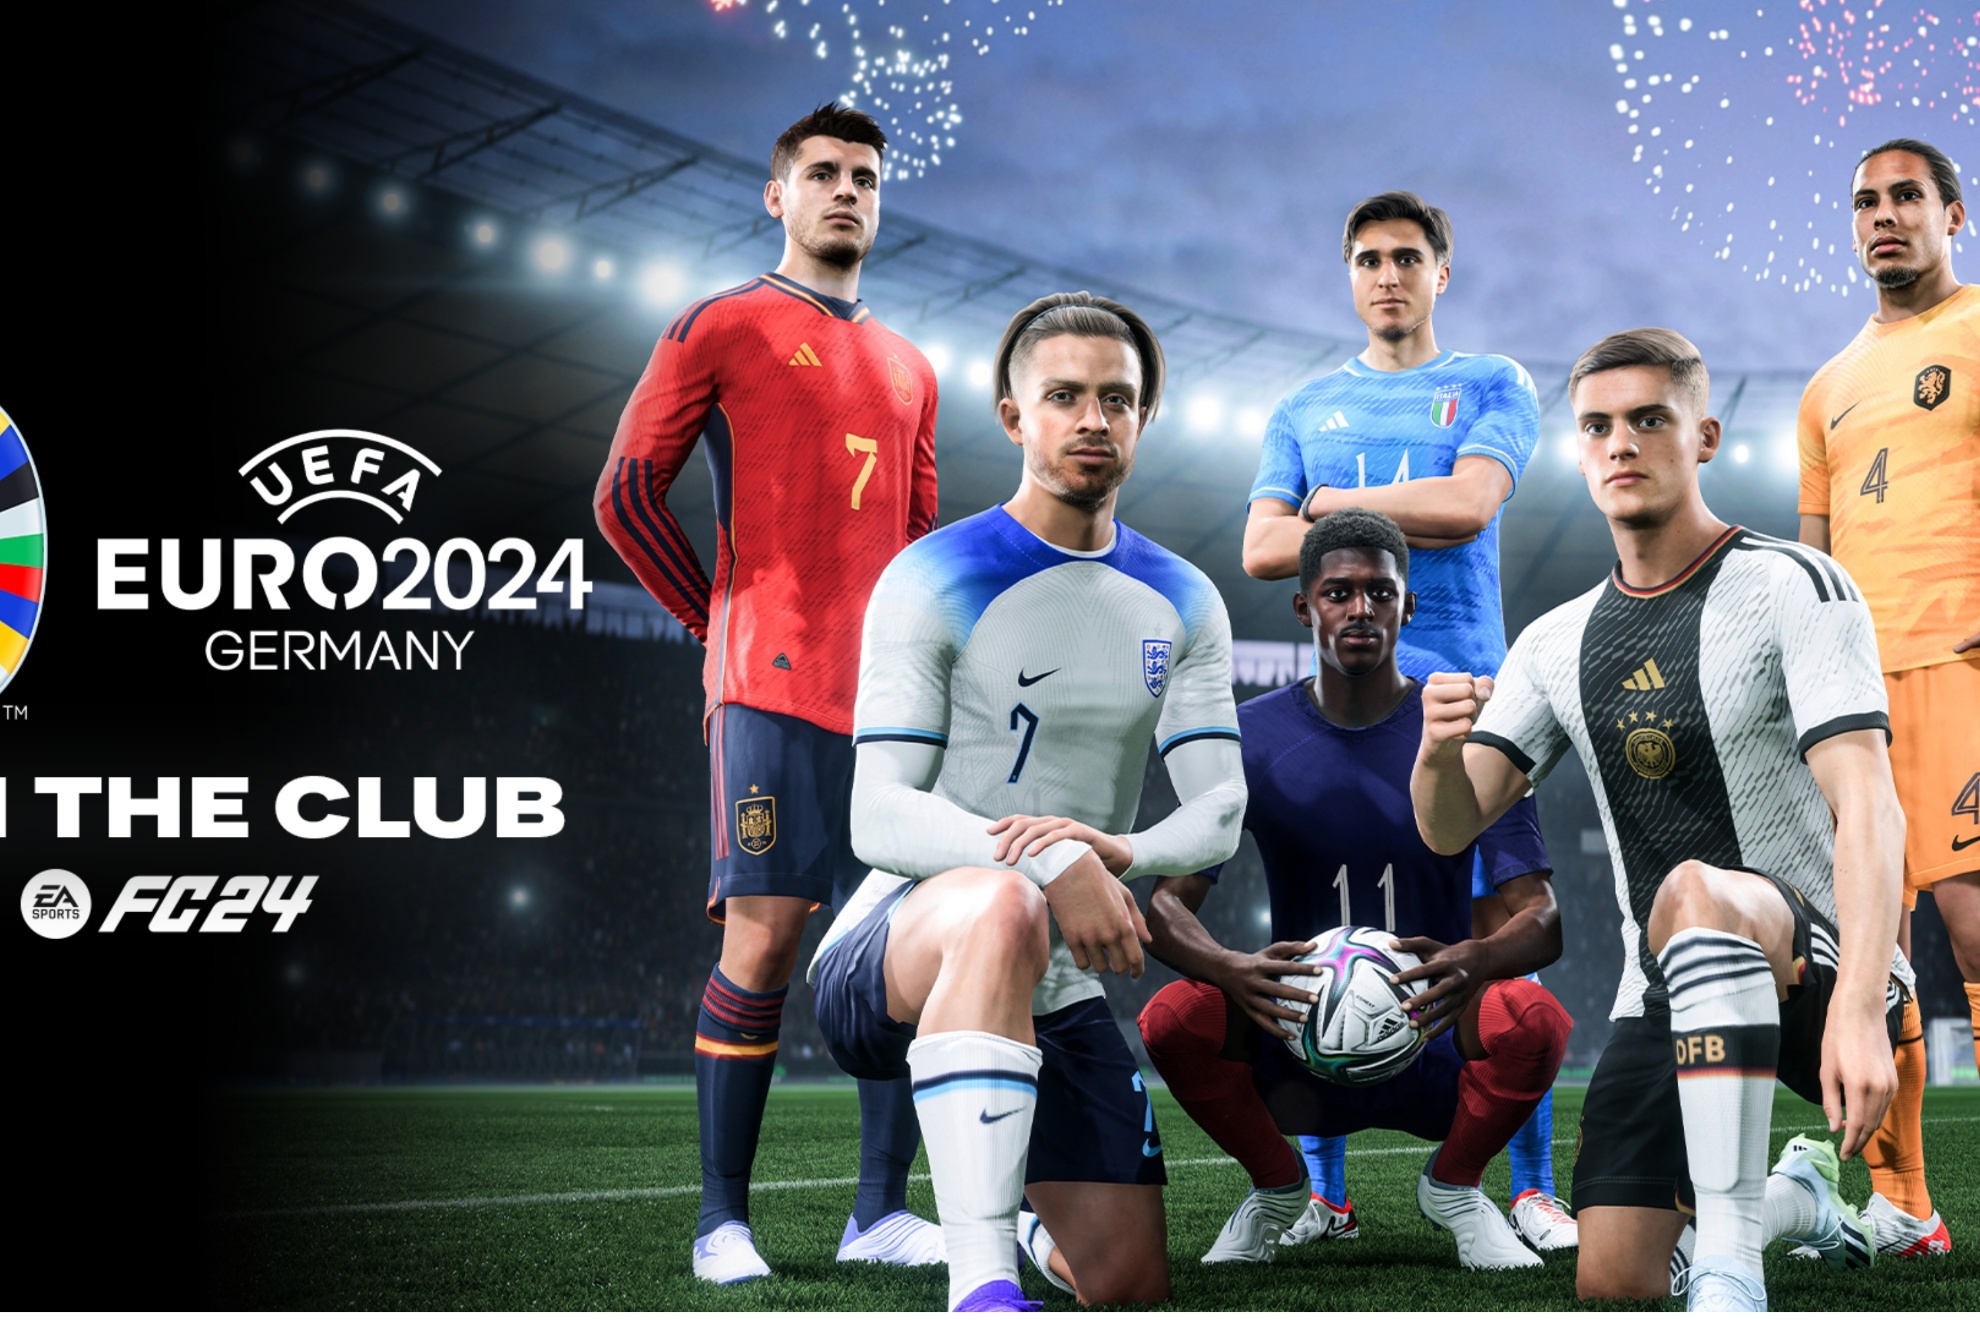 Euro 2024 came to EA Sports FC.